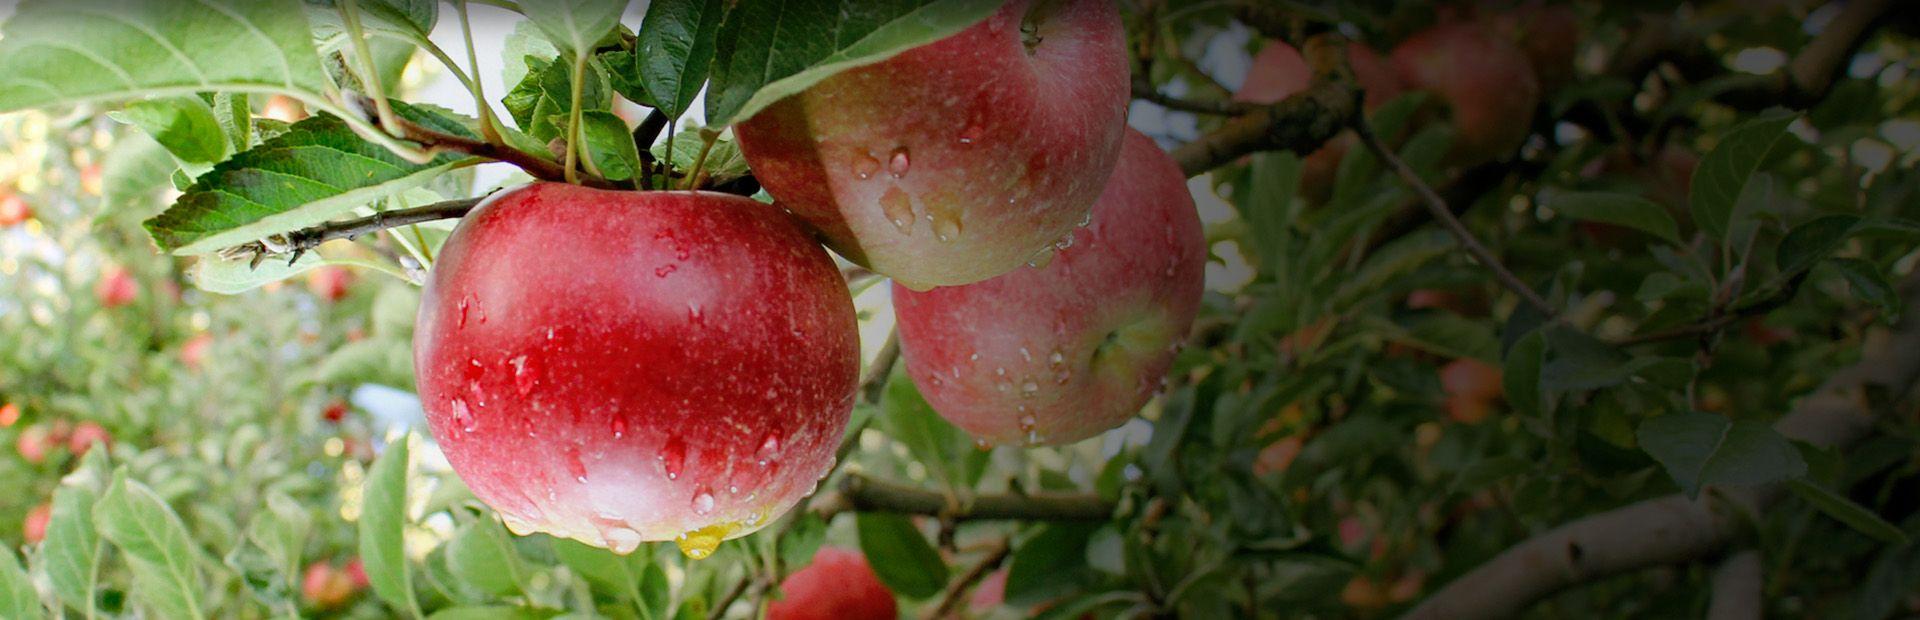 Slajd 3 - jabłka na gałęzi